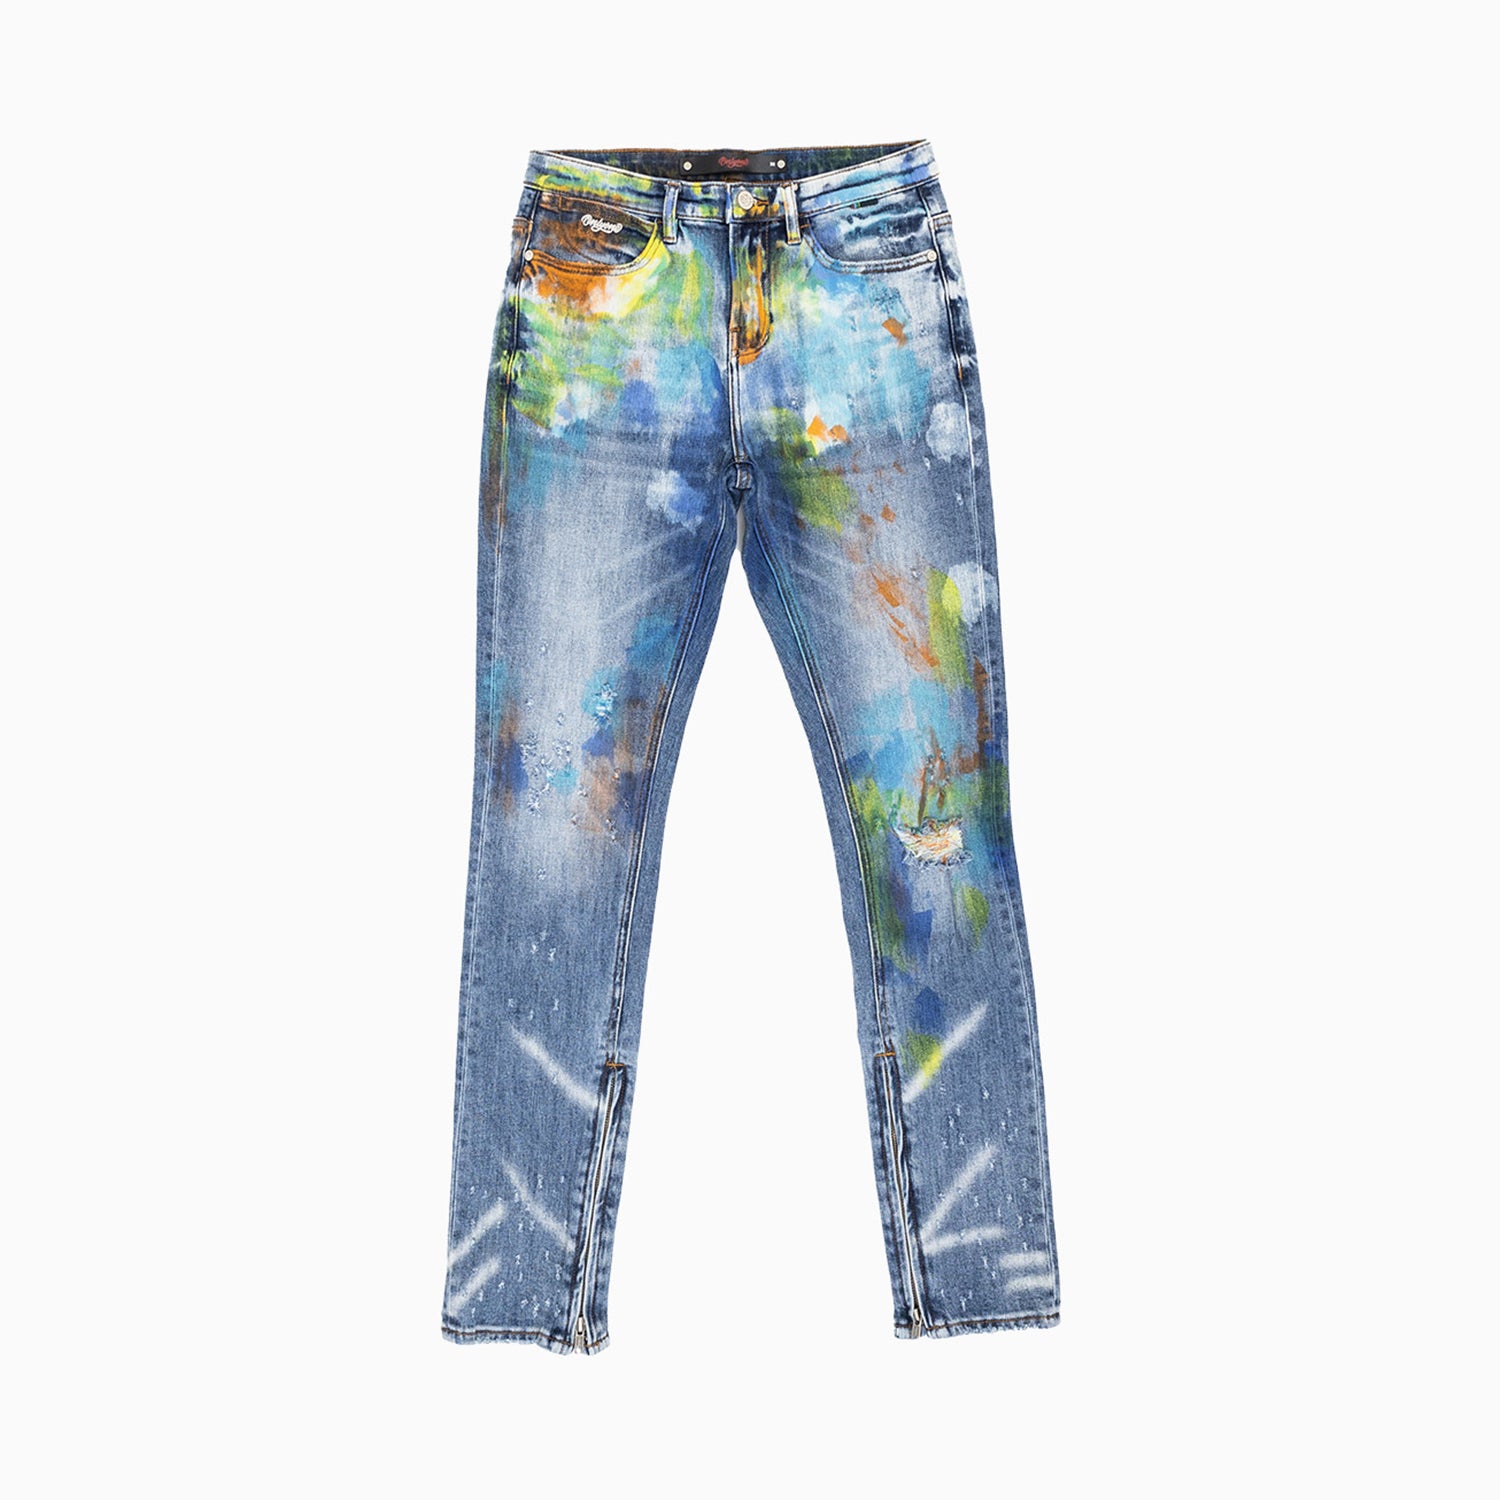 only-one-mens-long-island-zip-flair-splatter-jeans-denim-pant-onojn03-003